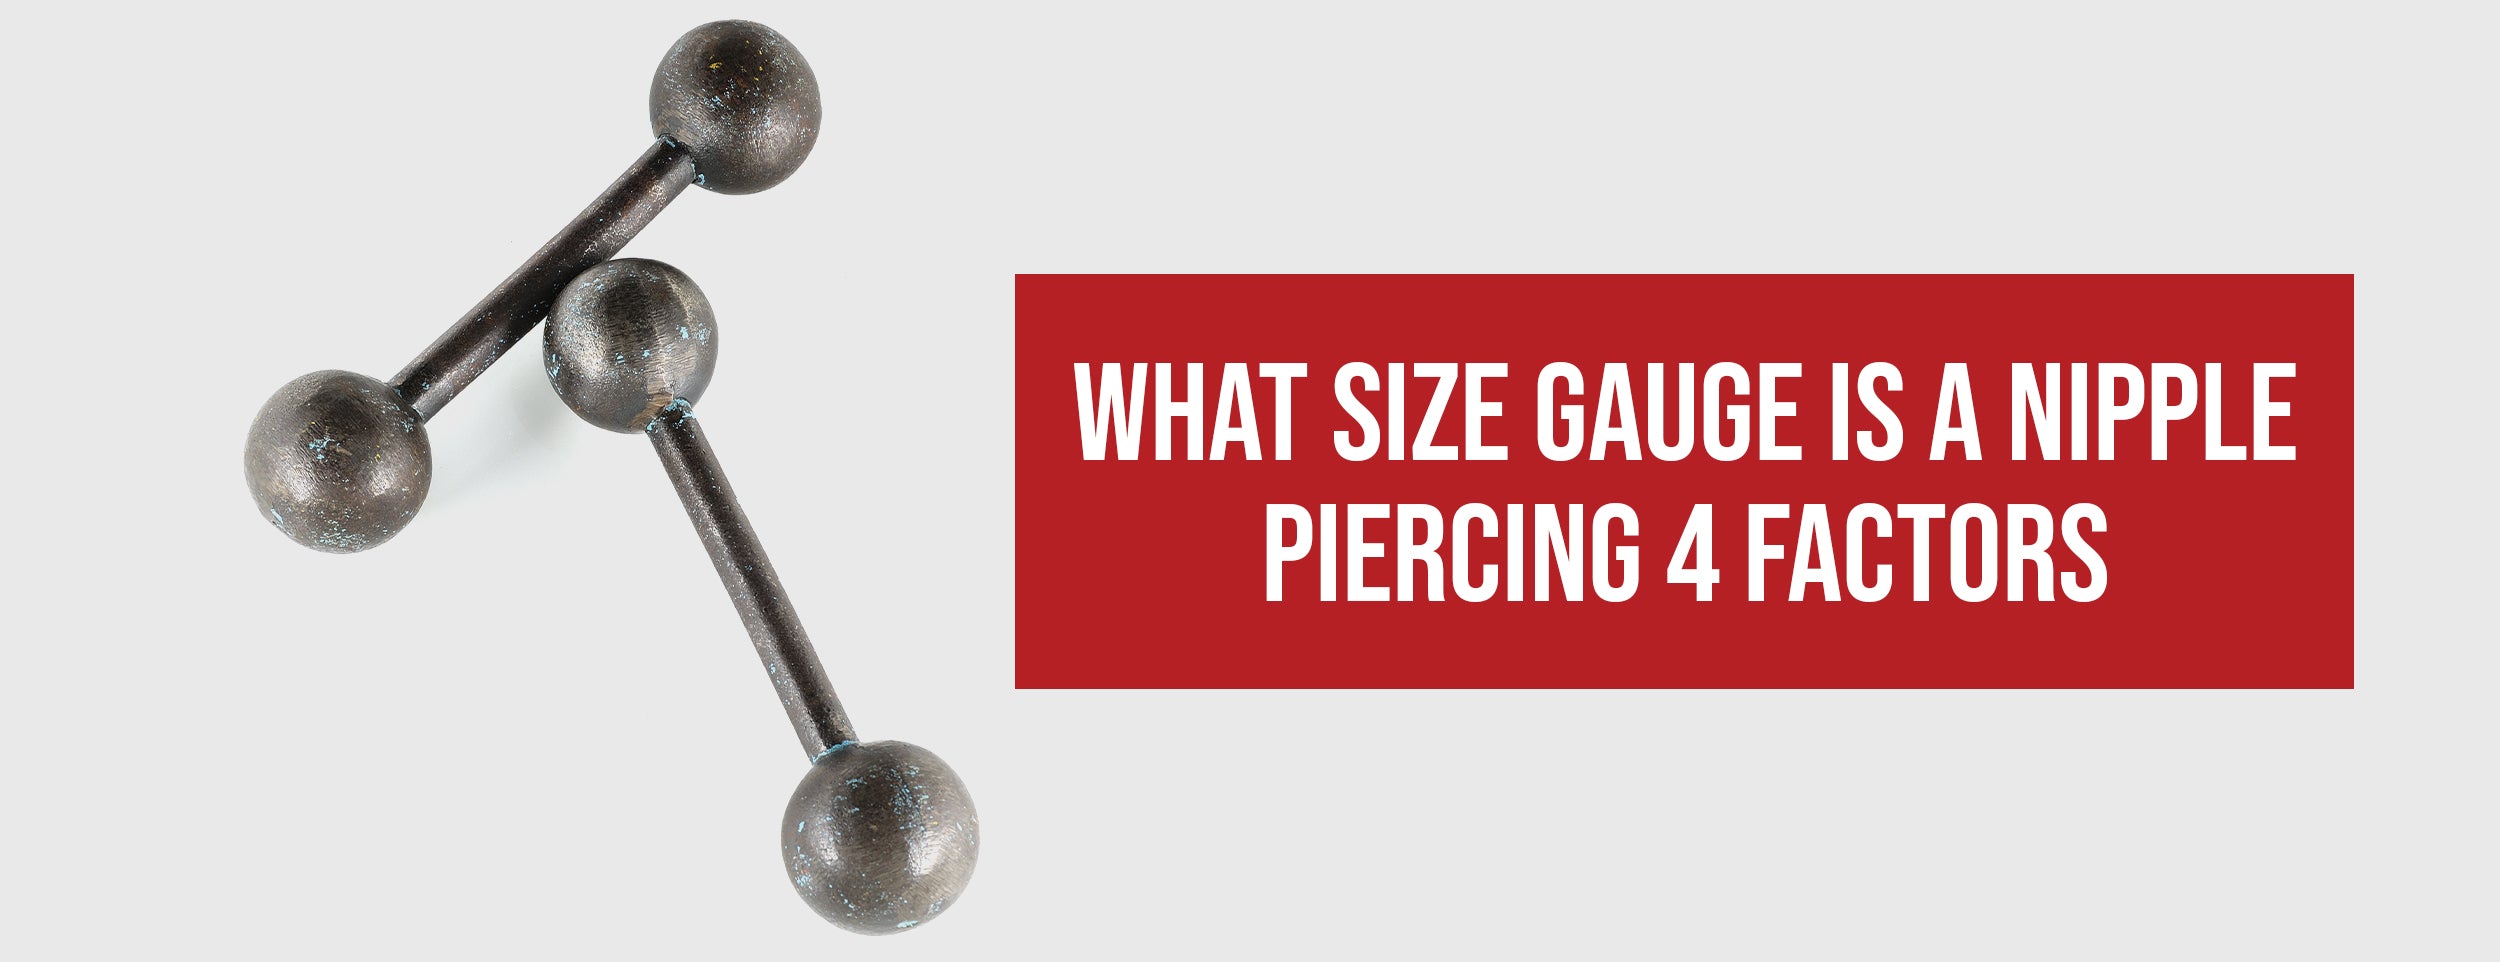 What Size Gauge Is a Nipple Piercing: 4 Factors